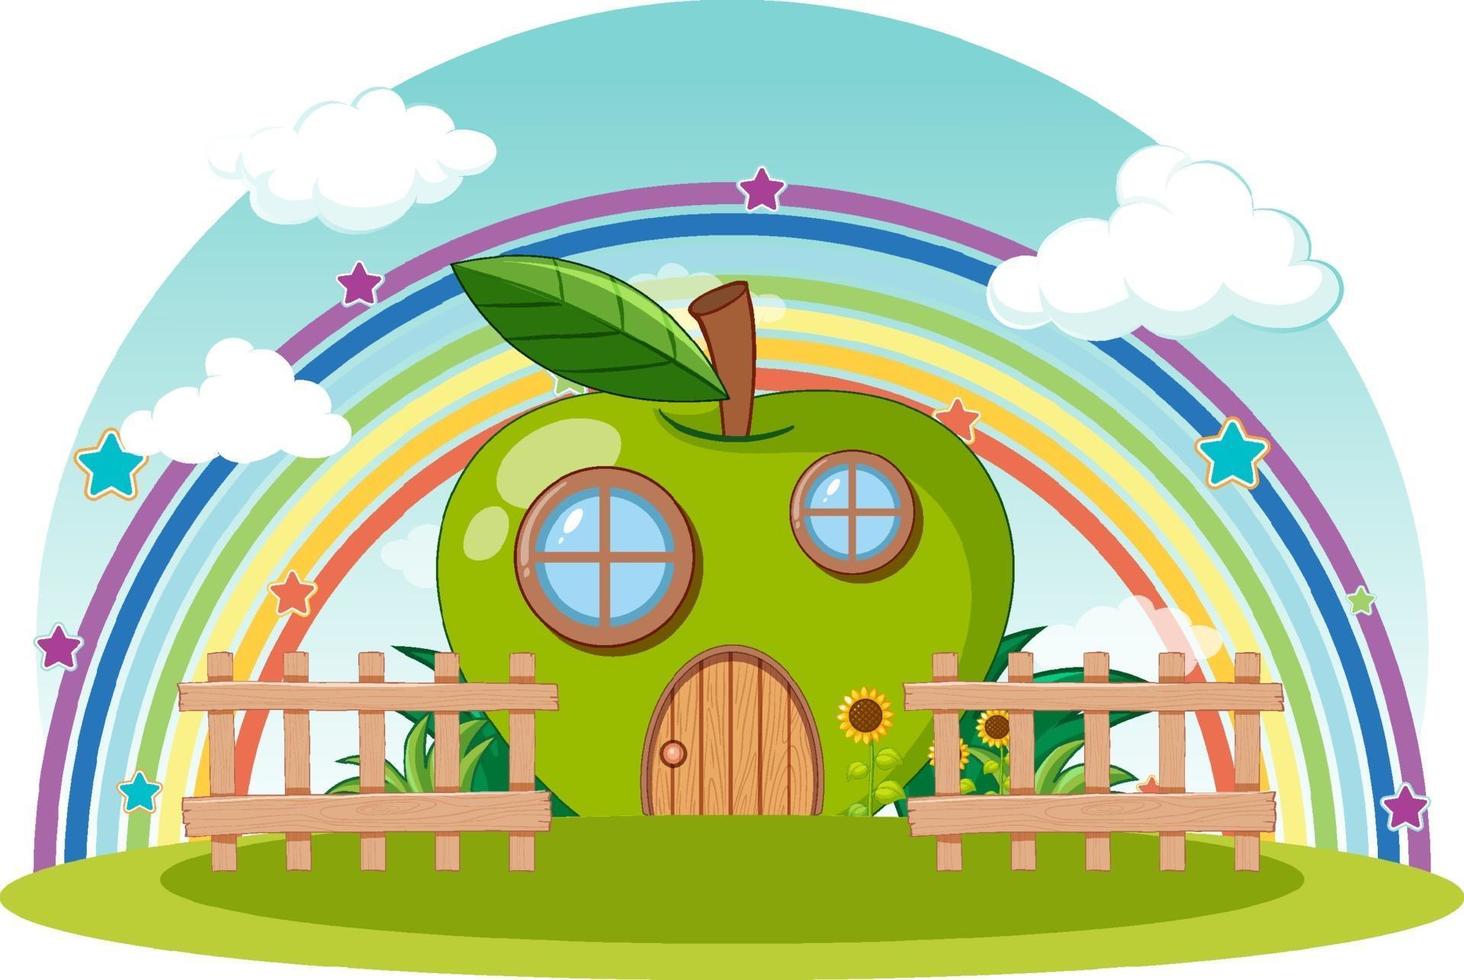 Green apple house with rainbow in the sky vector